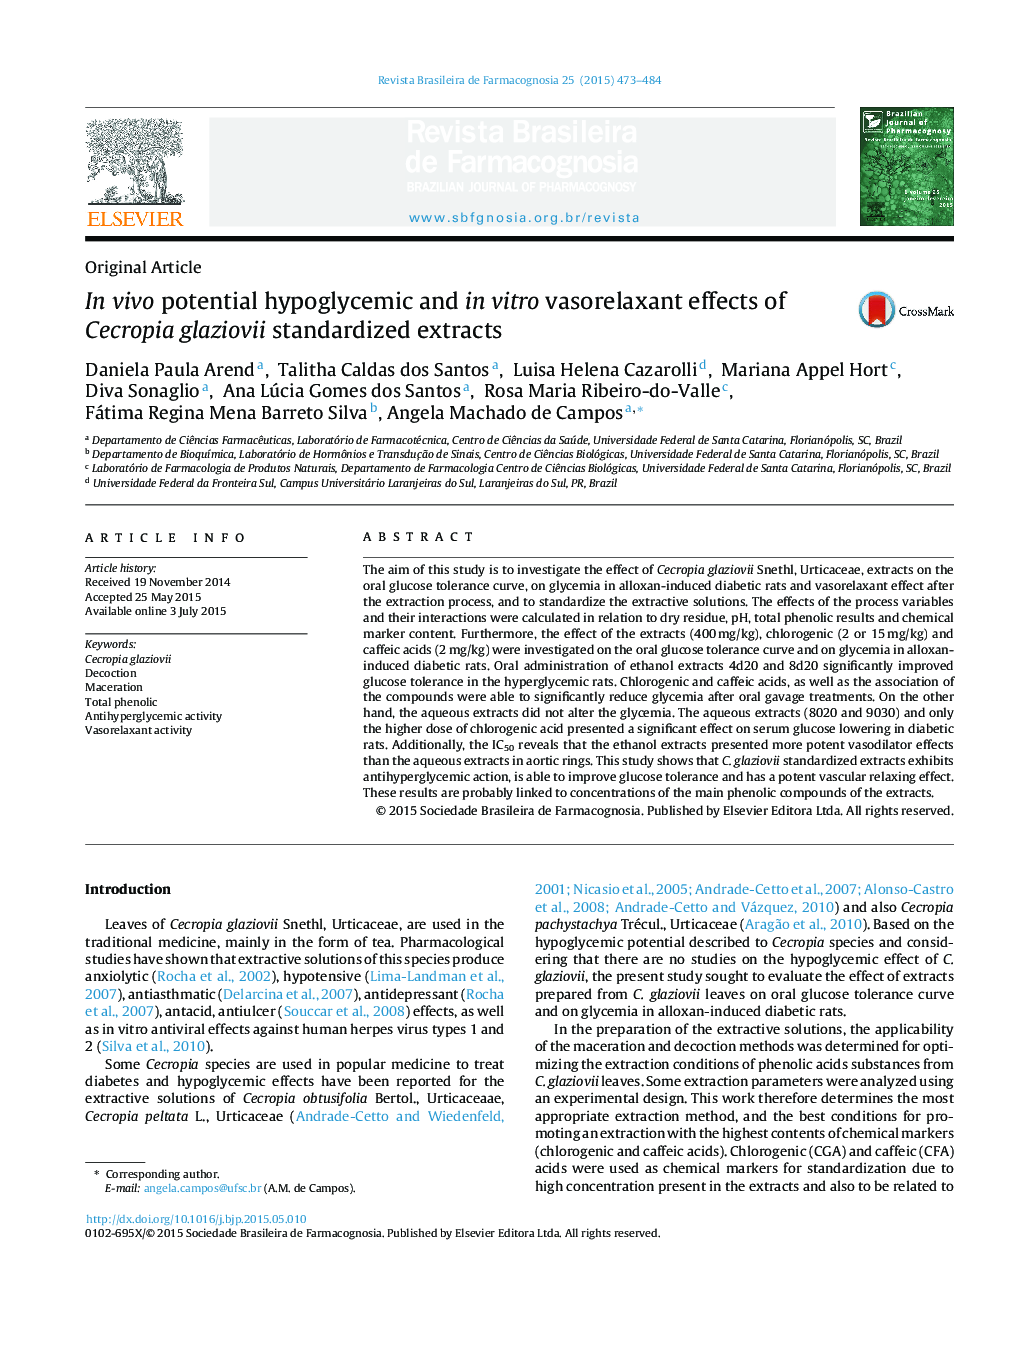 In vivo potential hypoglycemic and in vitro vasorelaxant effects of Cecropia glaziovii standardized extracts